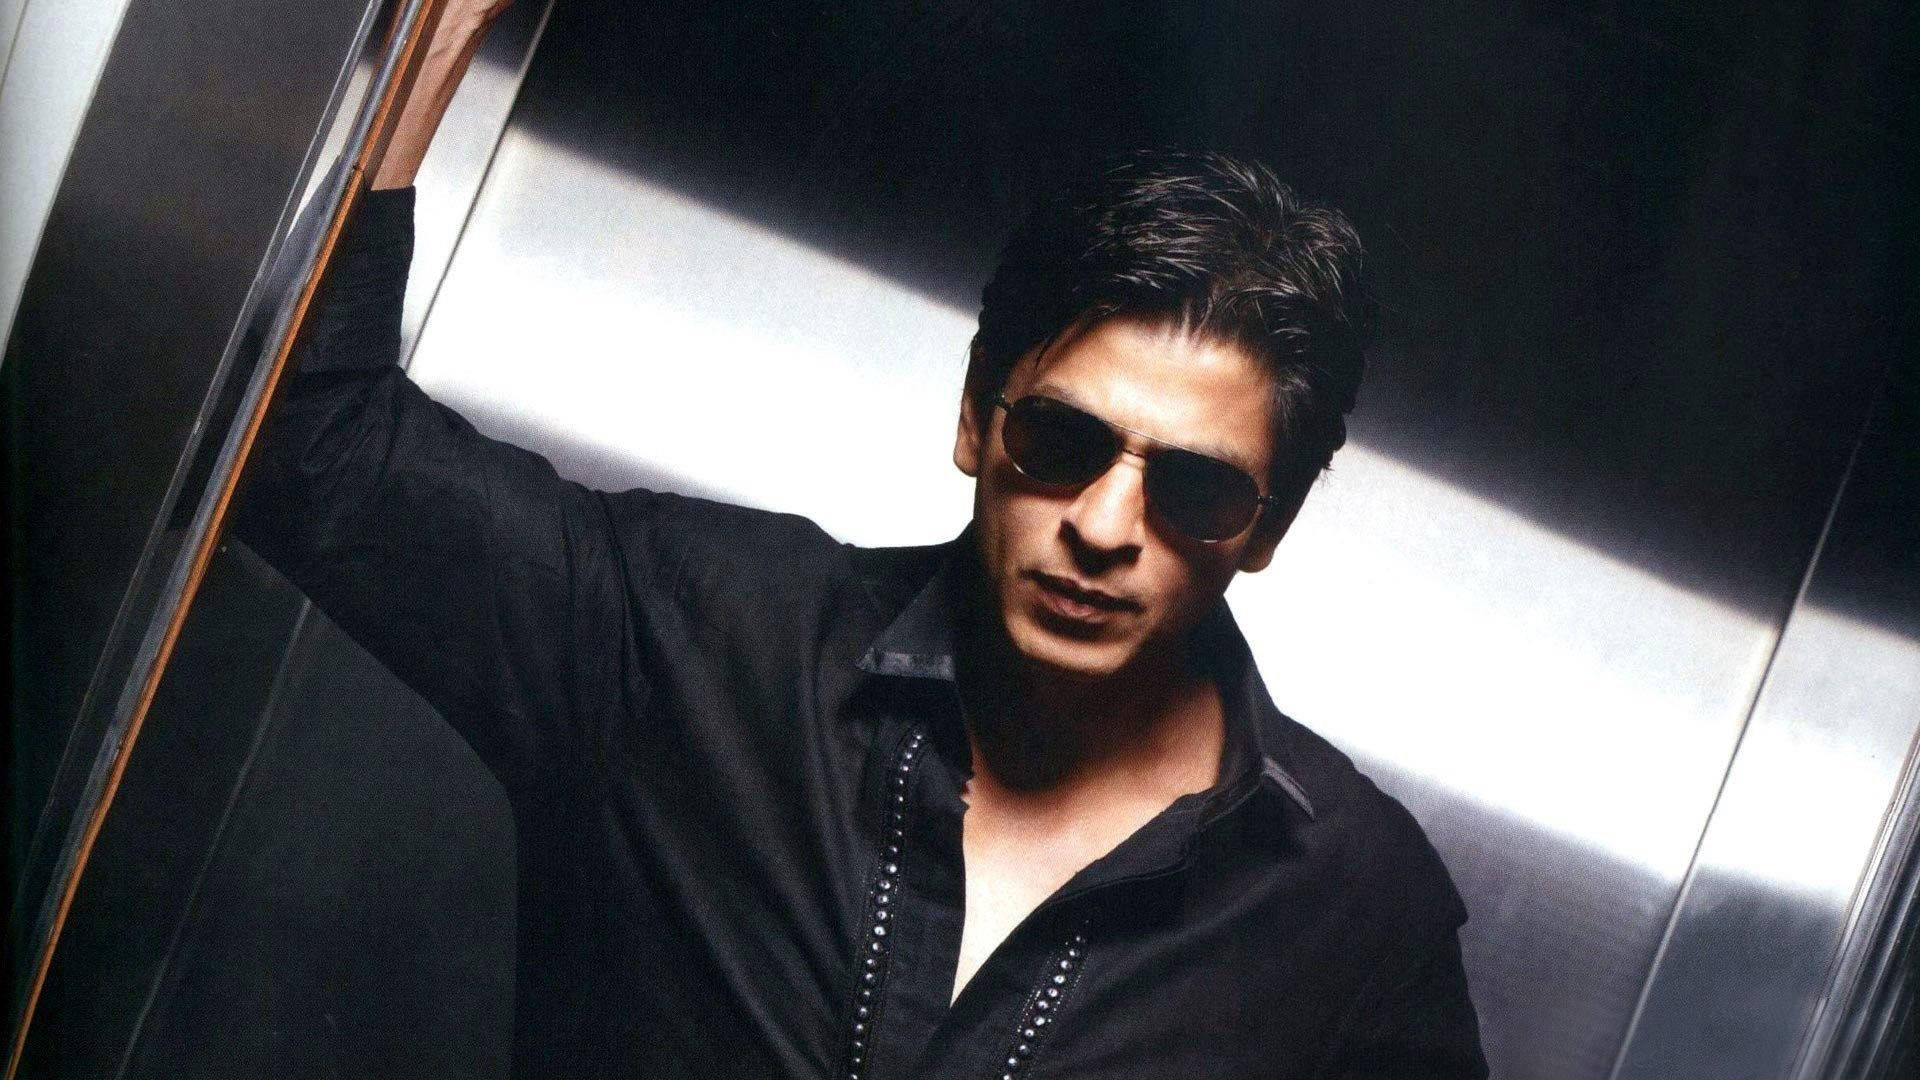 Free Shah Rukh Khan Wallpaper Downloads, [100+] Shah Rukh Khan Wallpapers  for FREE 